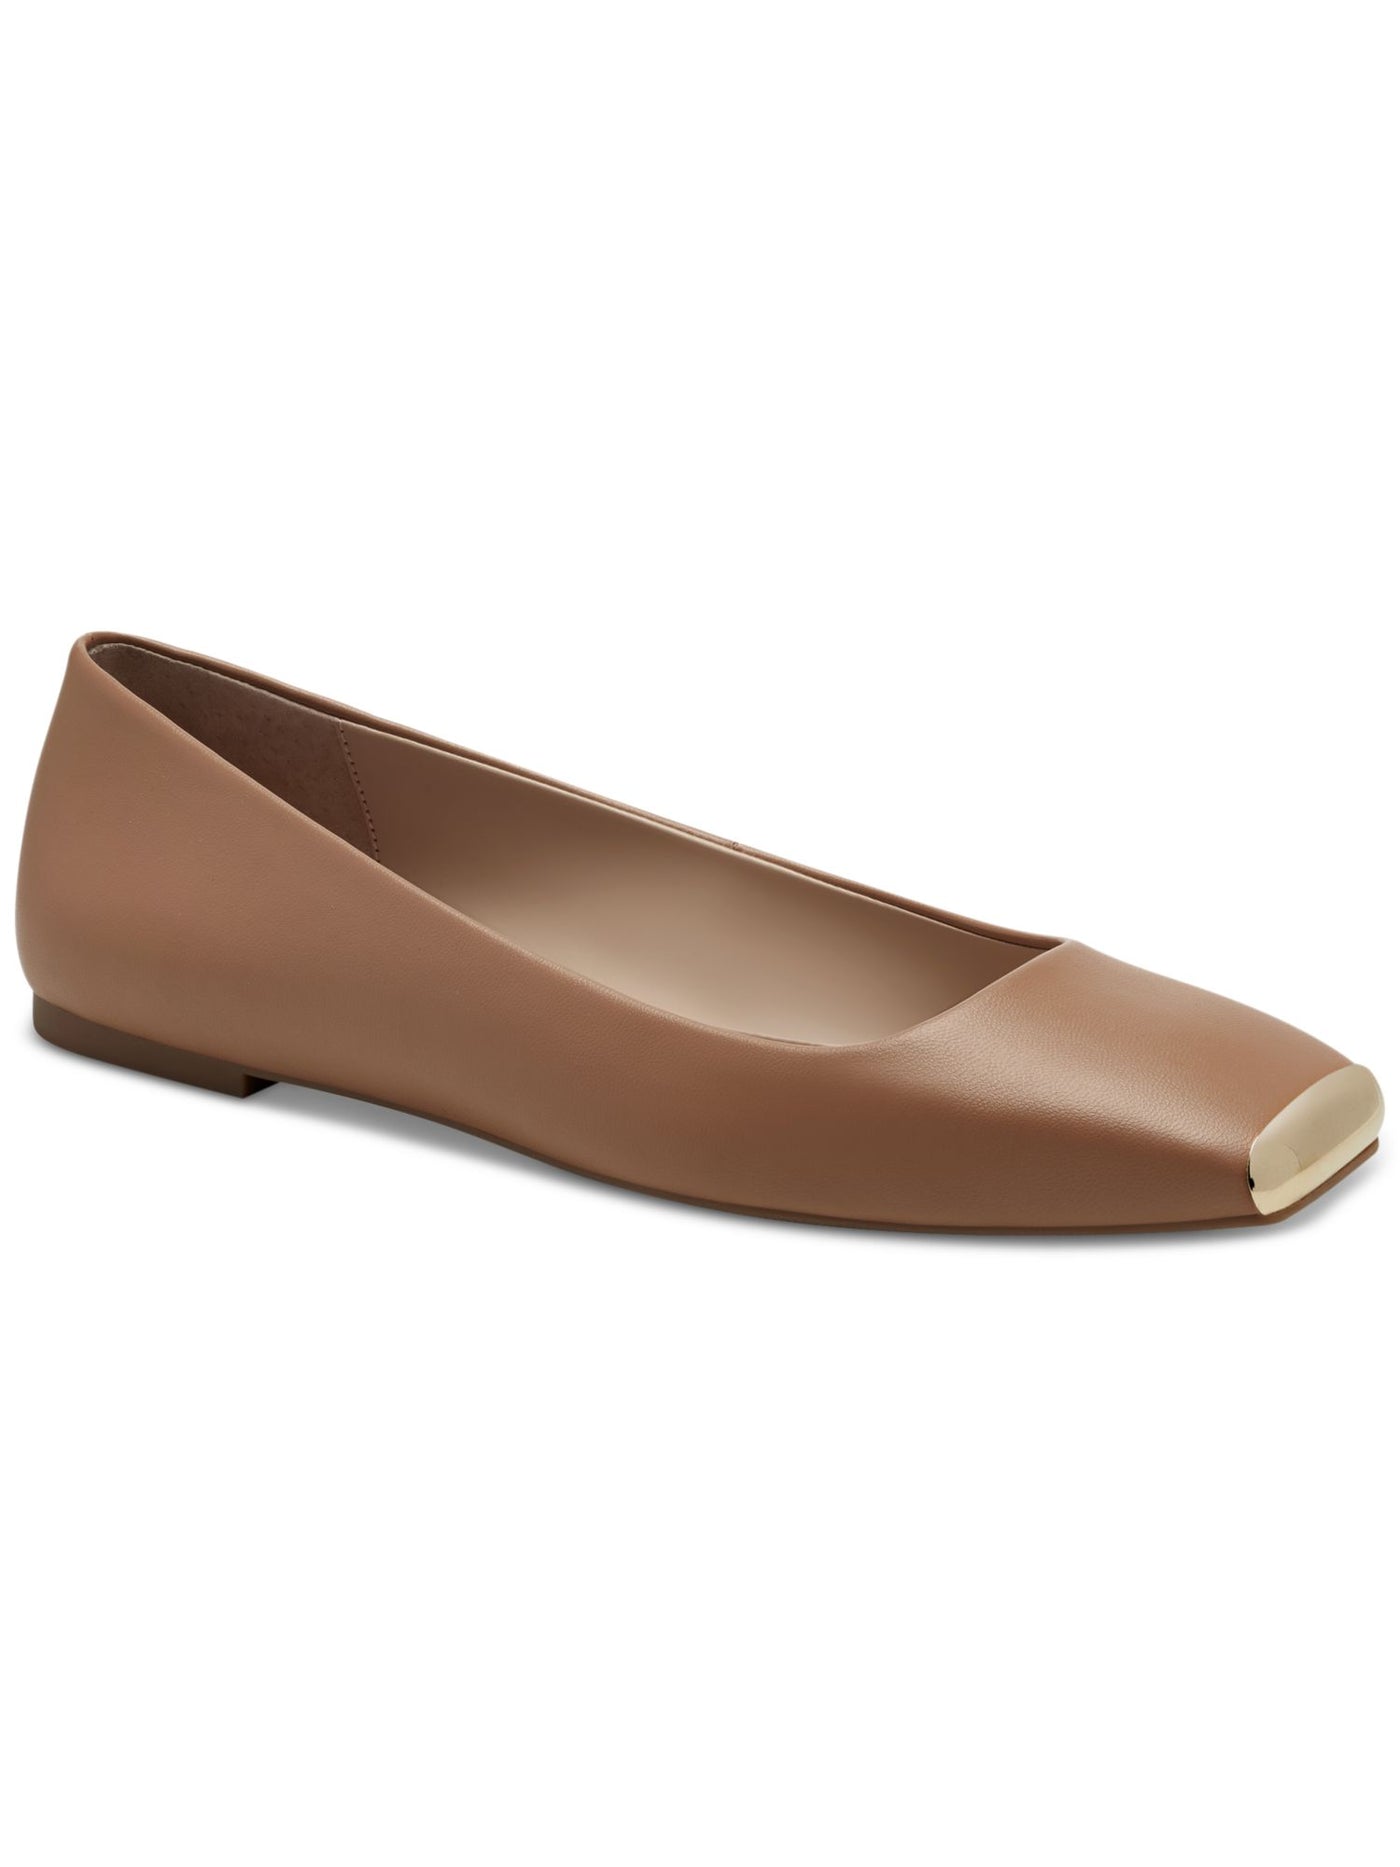 ALFANI Womens Brown Flexible Sole Padded Metallic Neptoon Square Toe Block Heel Slip On Flats Shoes 5 M